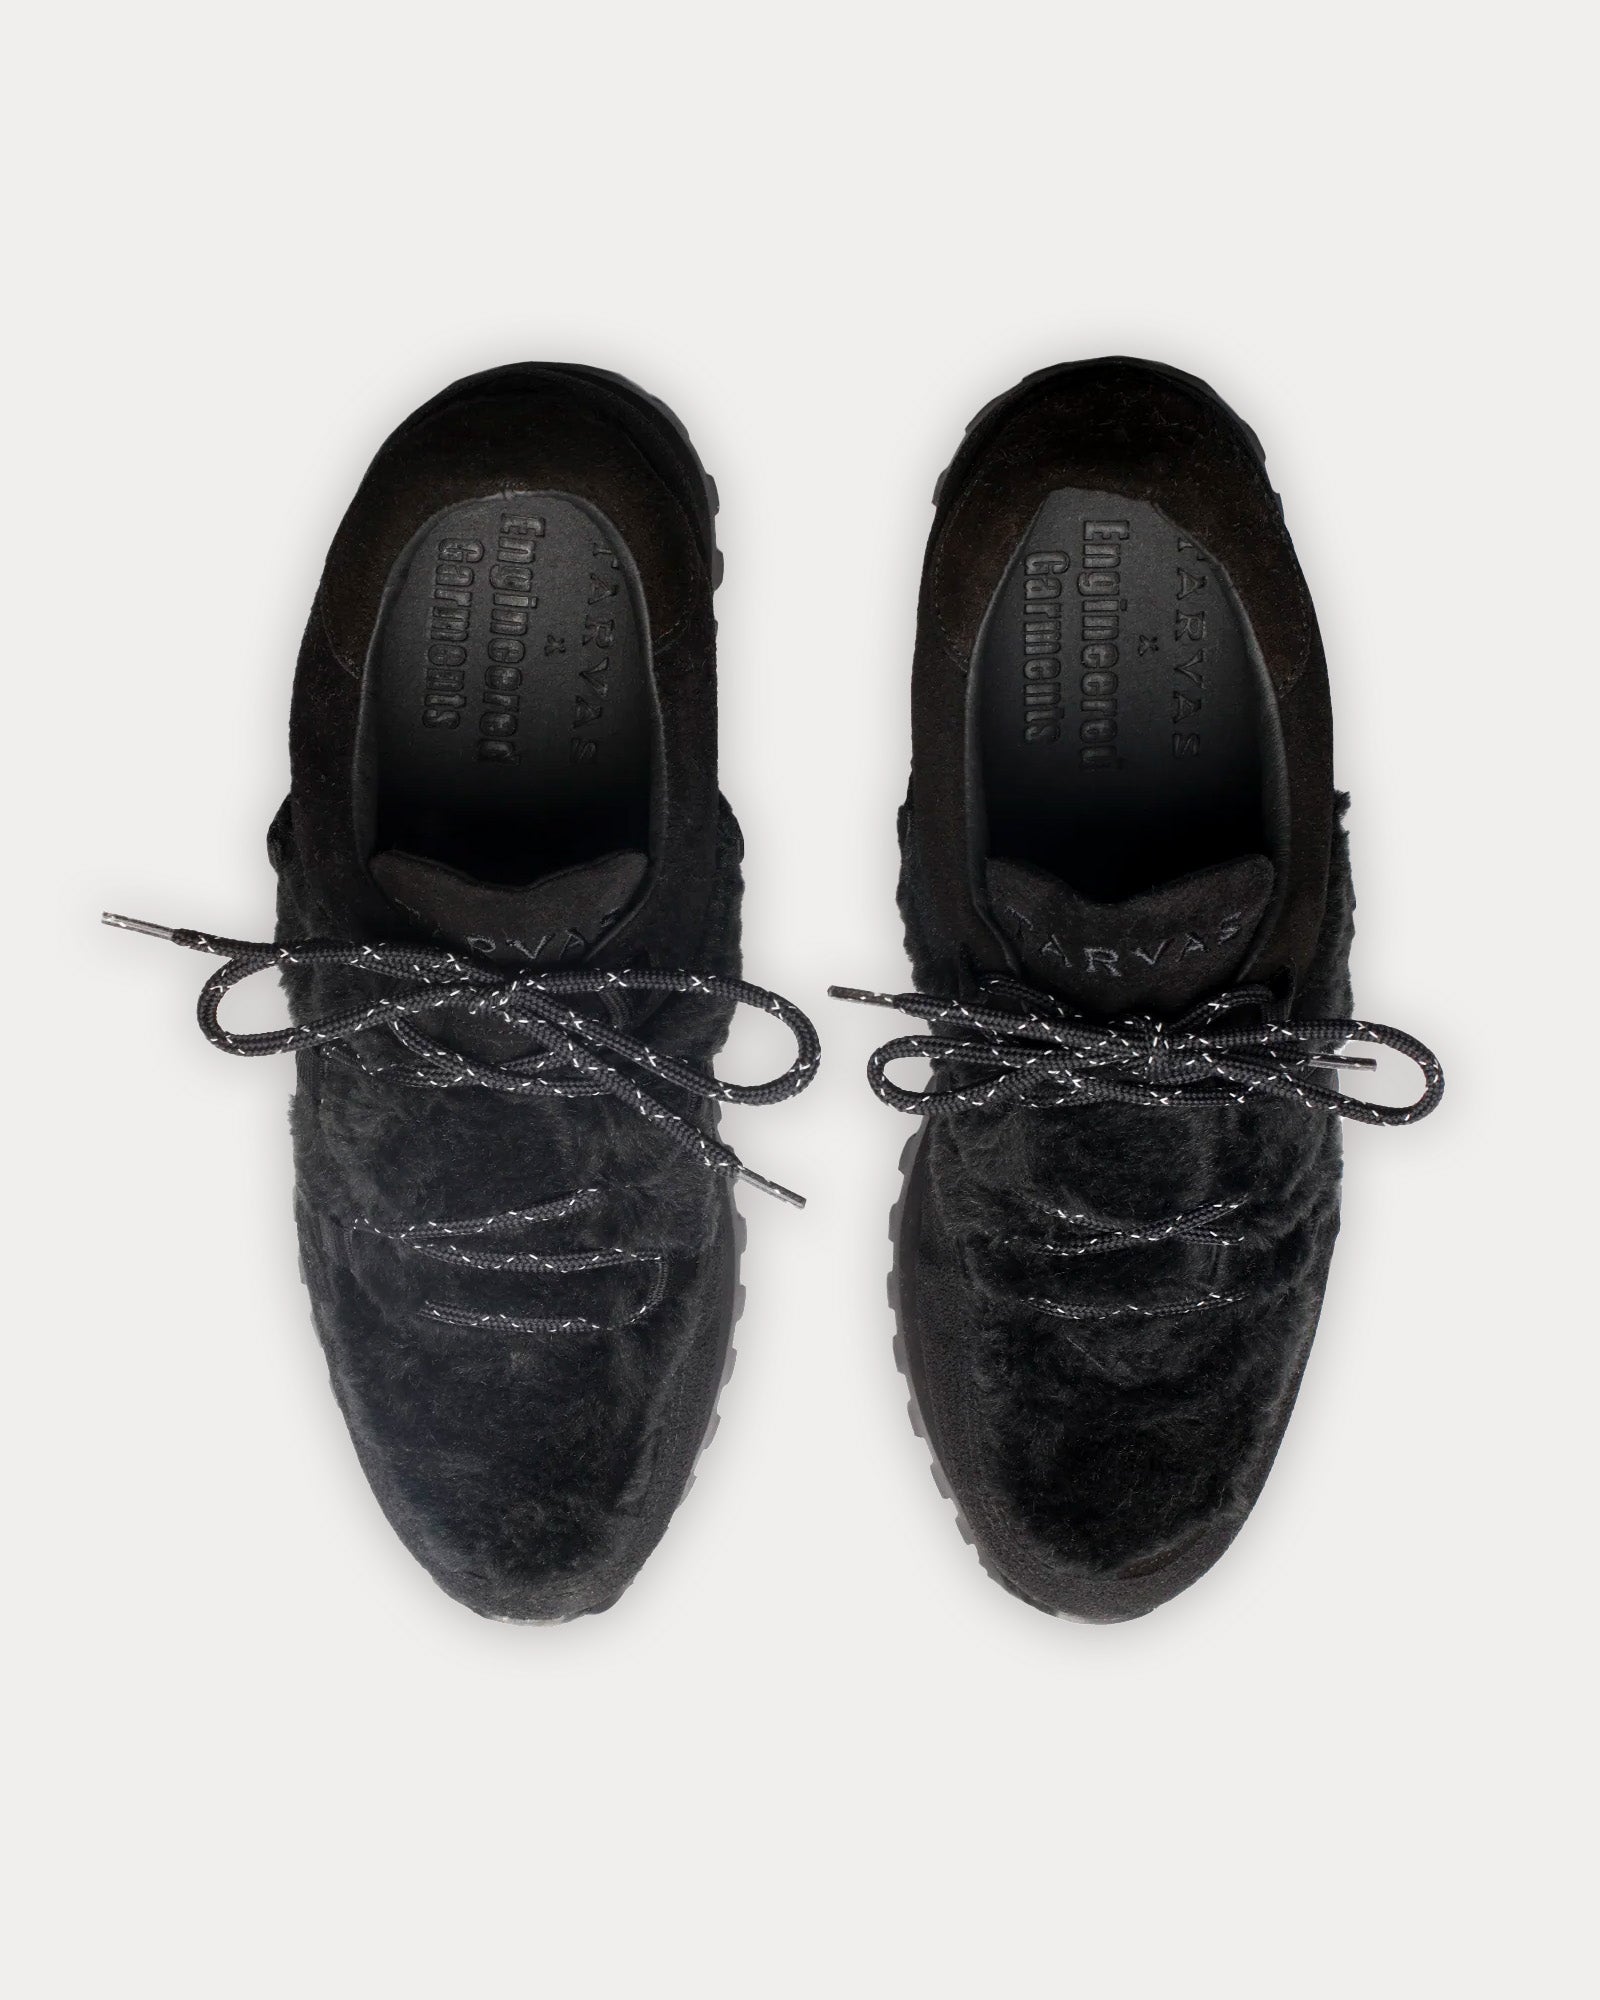 Tarvas x Engineered Garments - Forest Bather Black Low Top Sneakers